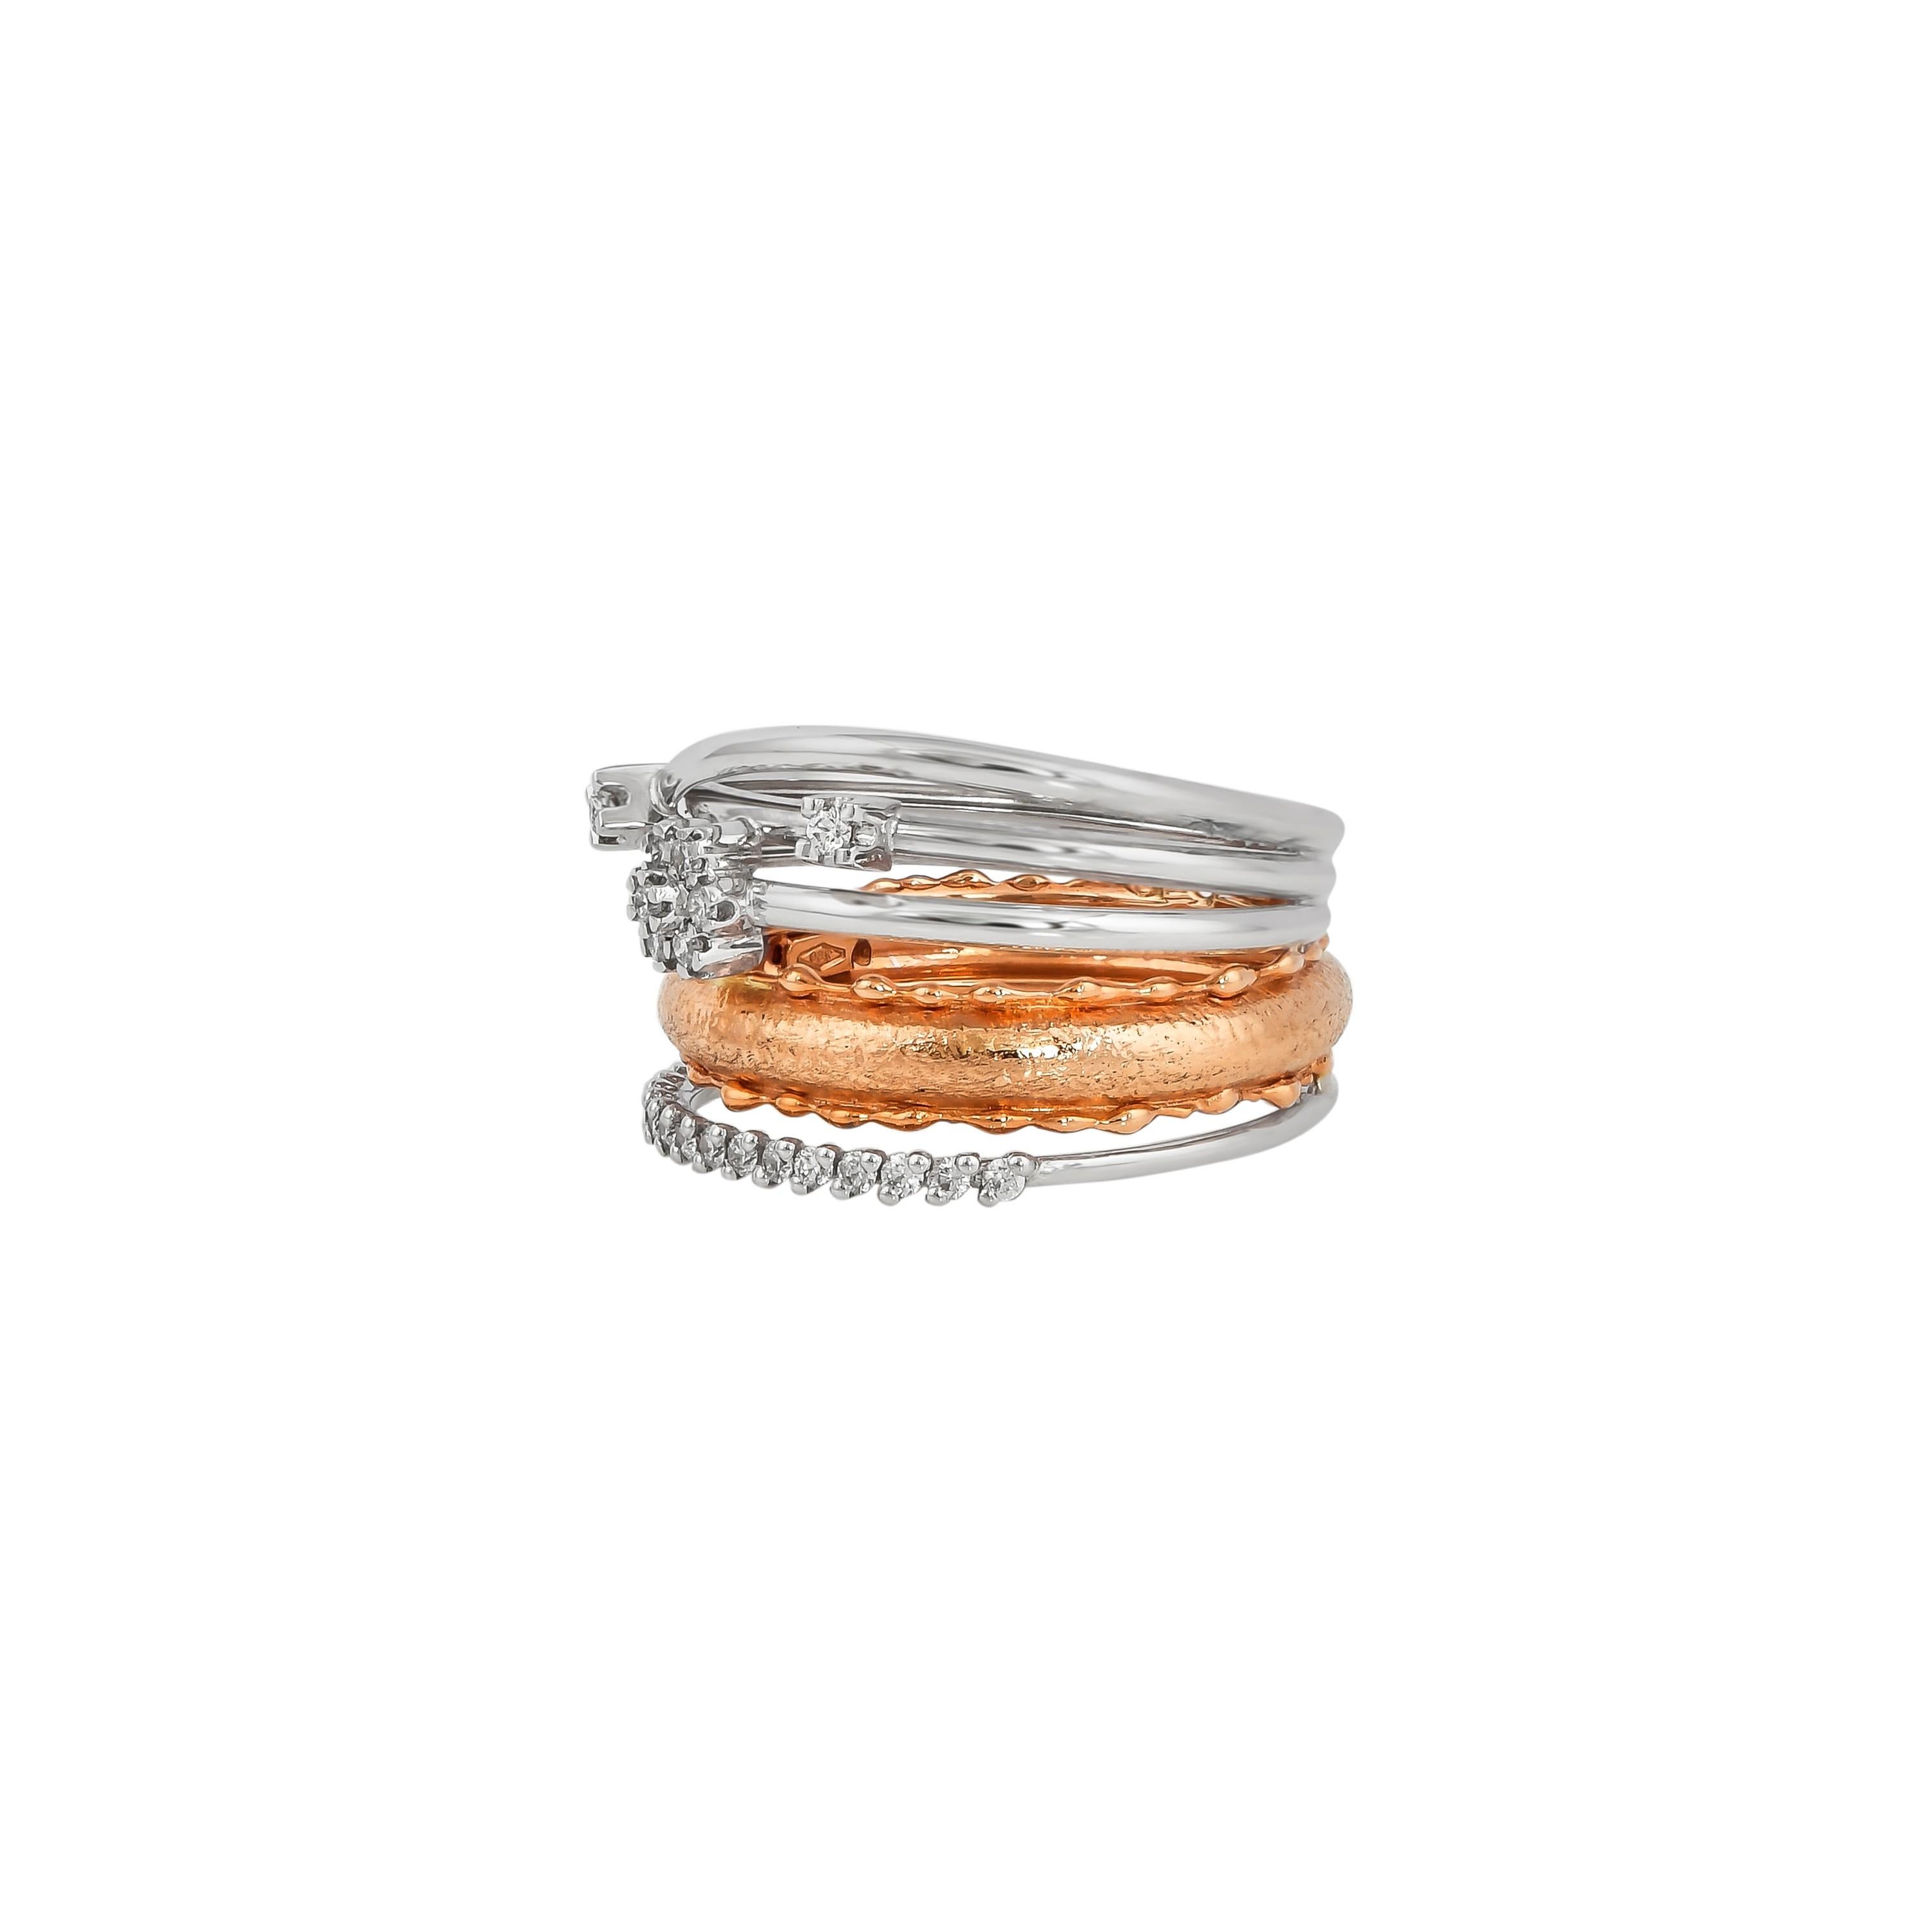 Contemporary 0.198 Carat Diamond Ring in 18 Karat White & Rose Gold For Sale